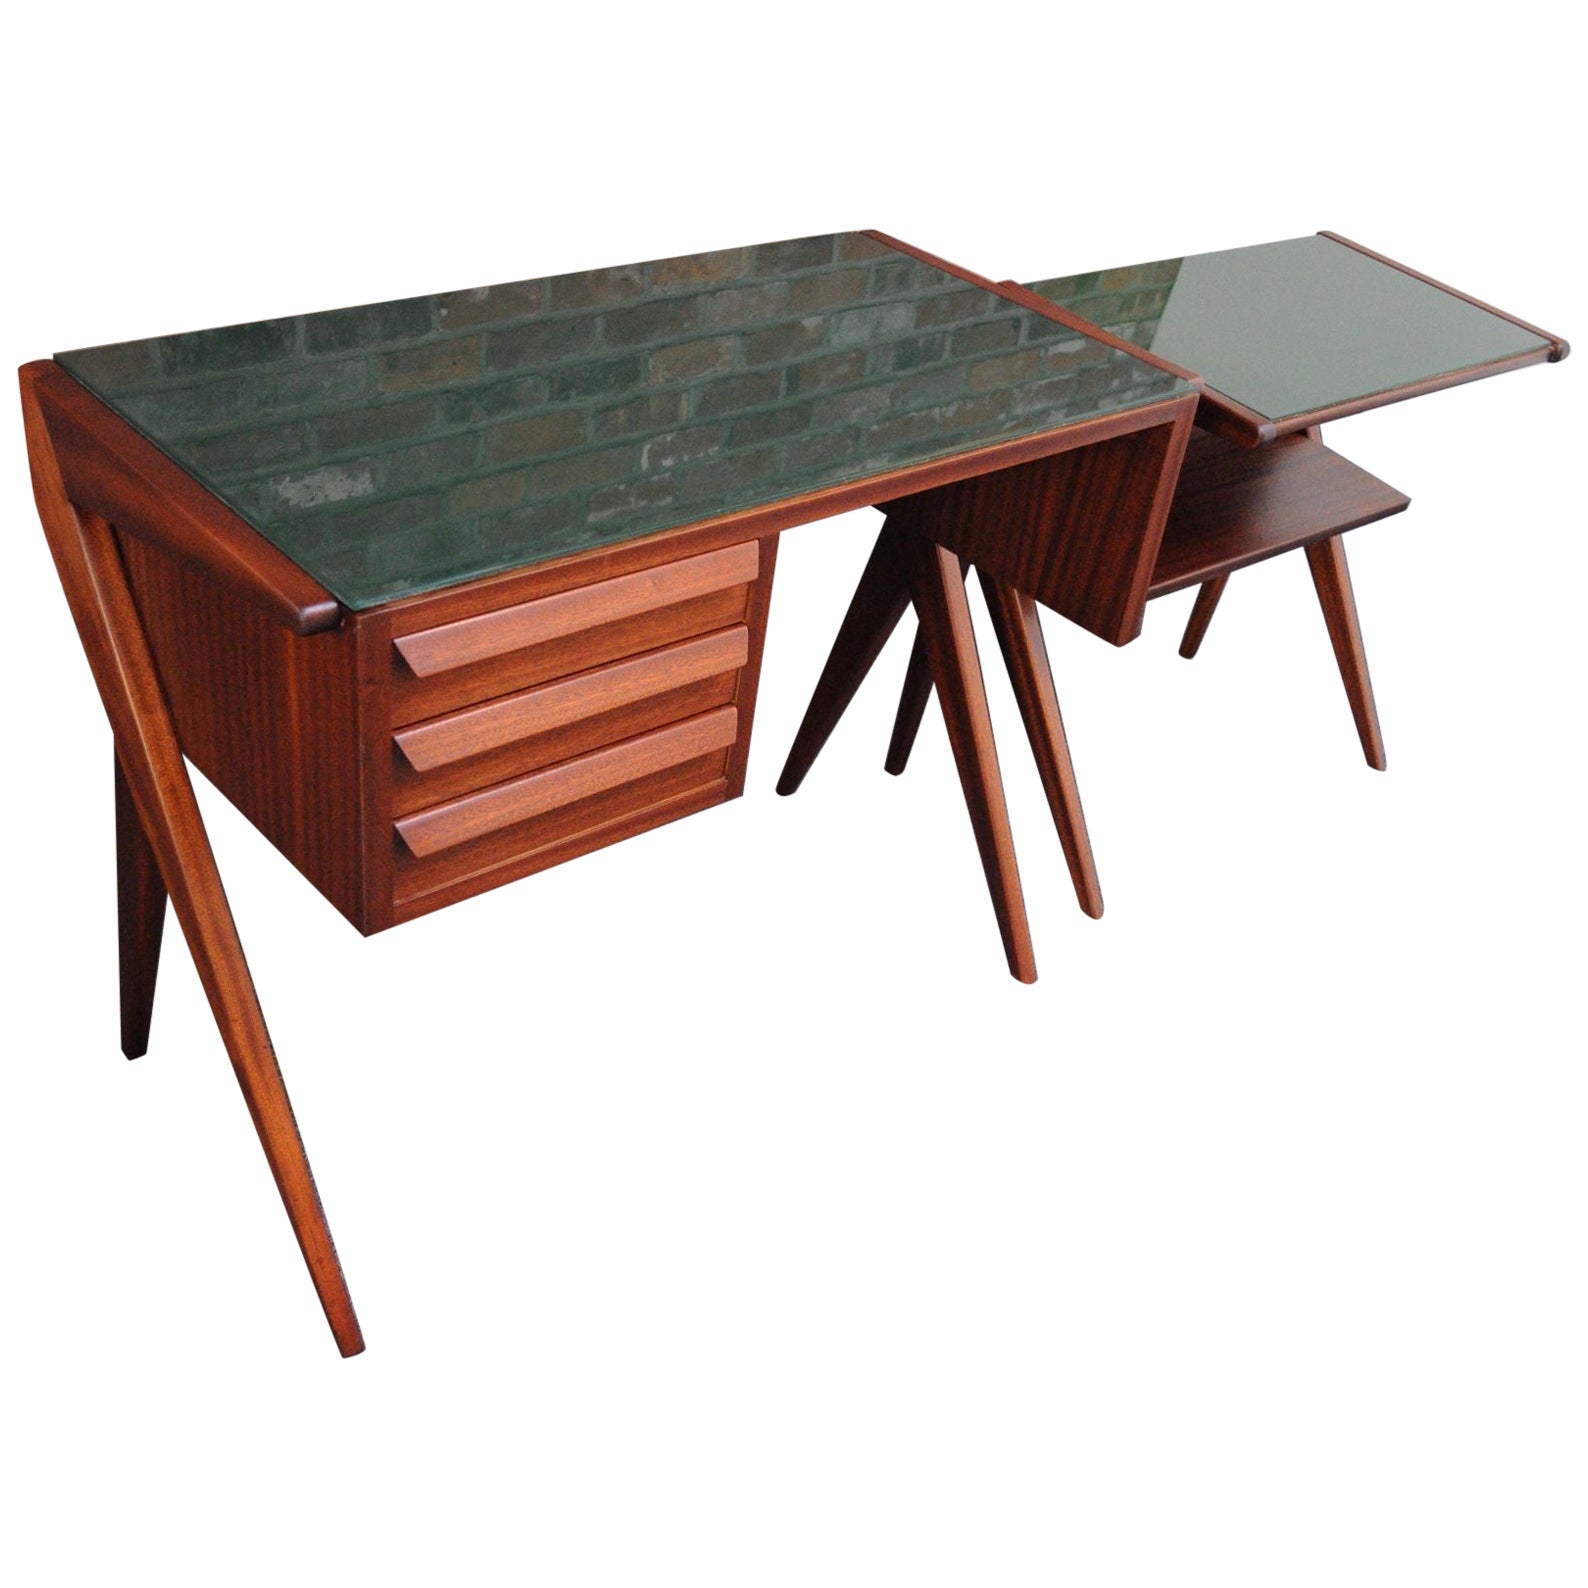 Silvio Cavatorta Diminutive Desk with Companion Table in Walnut and Green Glass For Sale